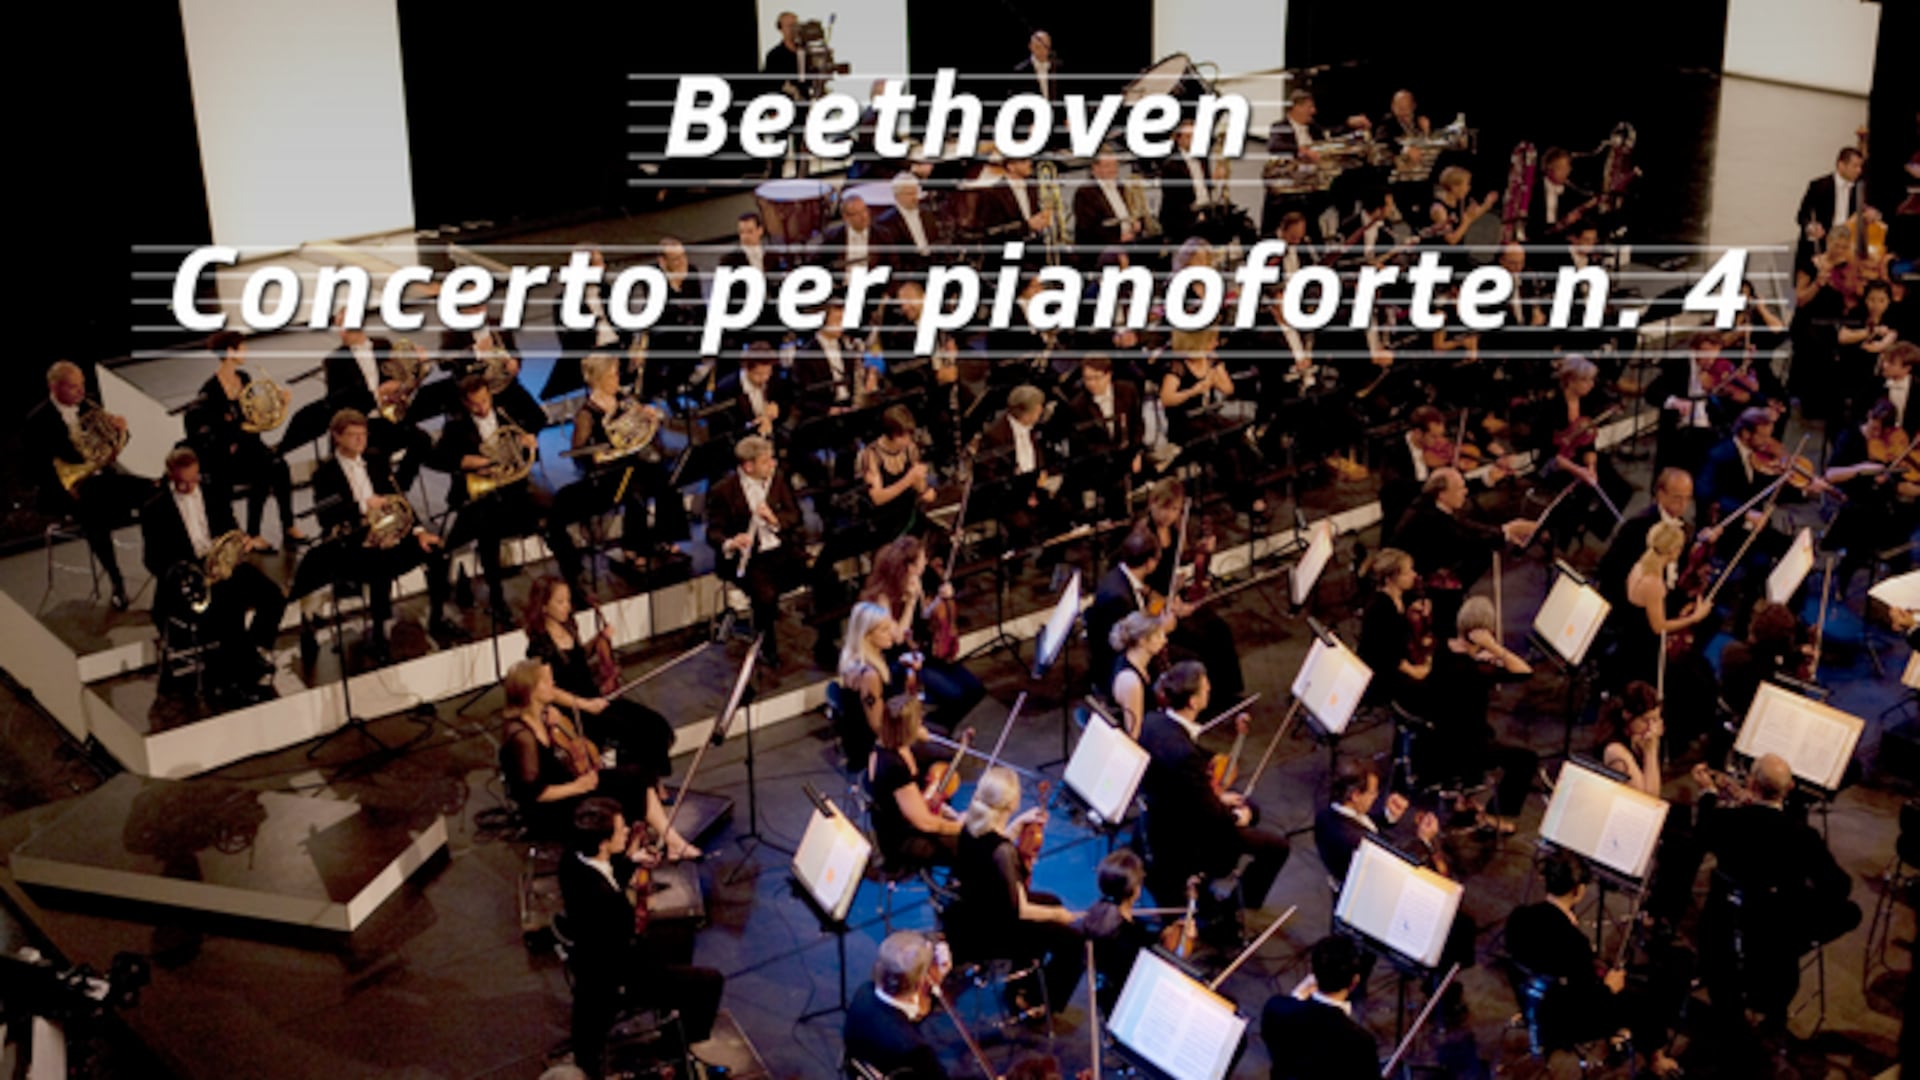 Beethoven - Concerto per pianoforte n. 4